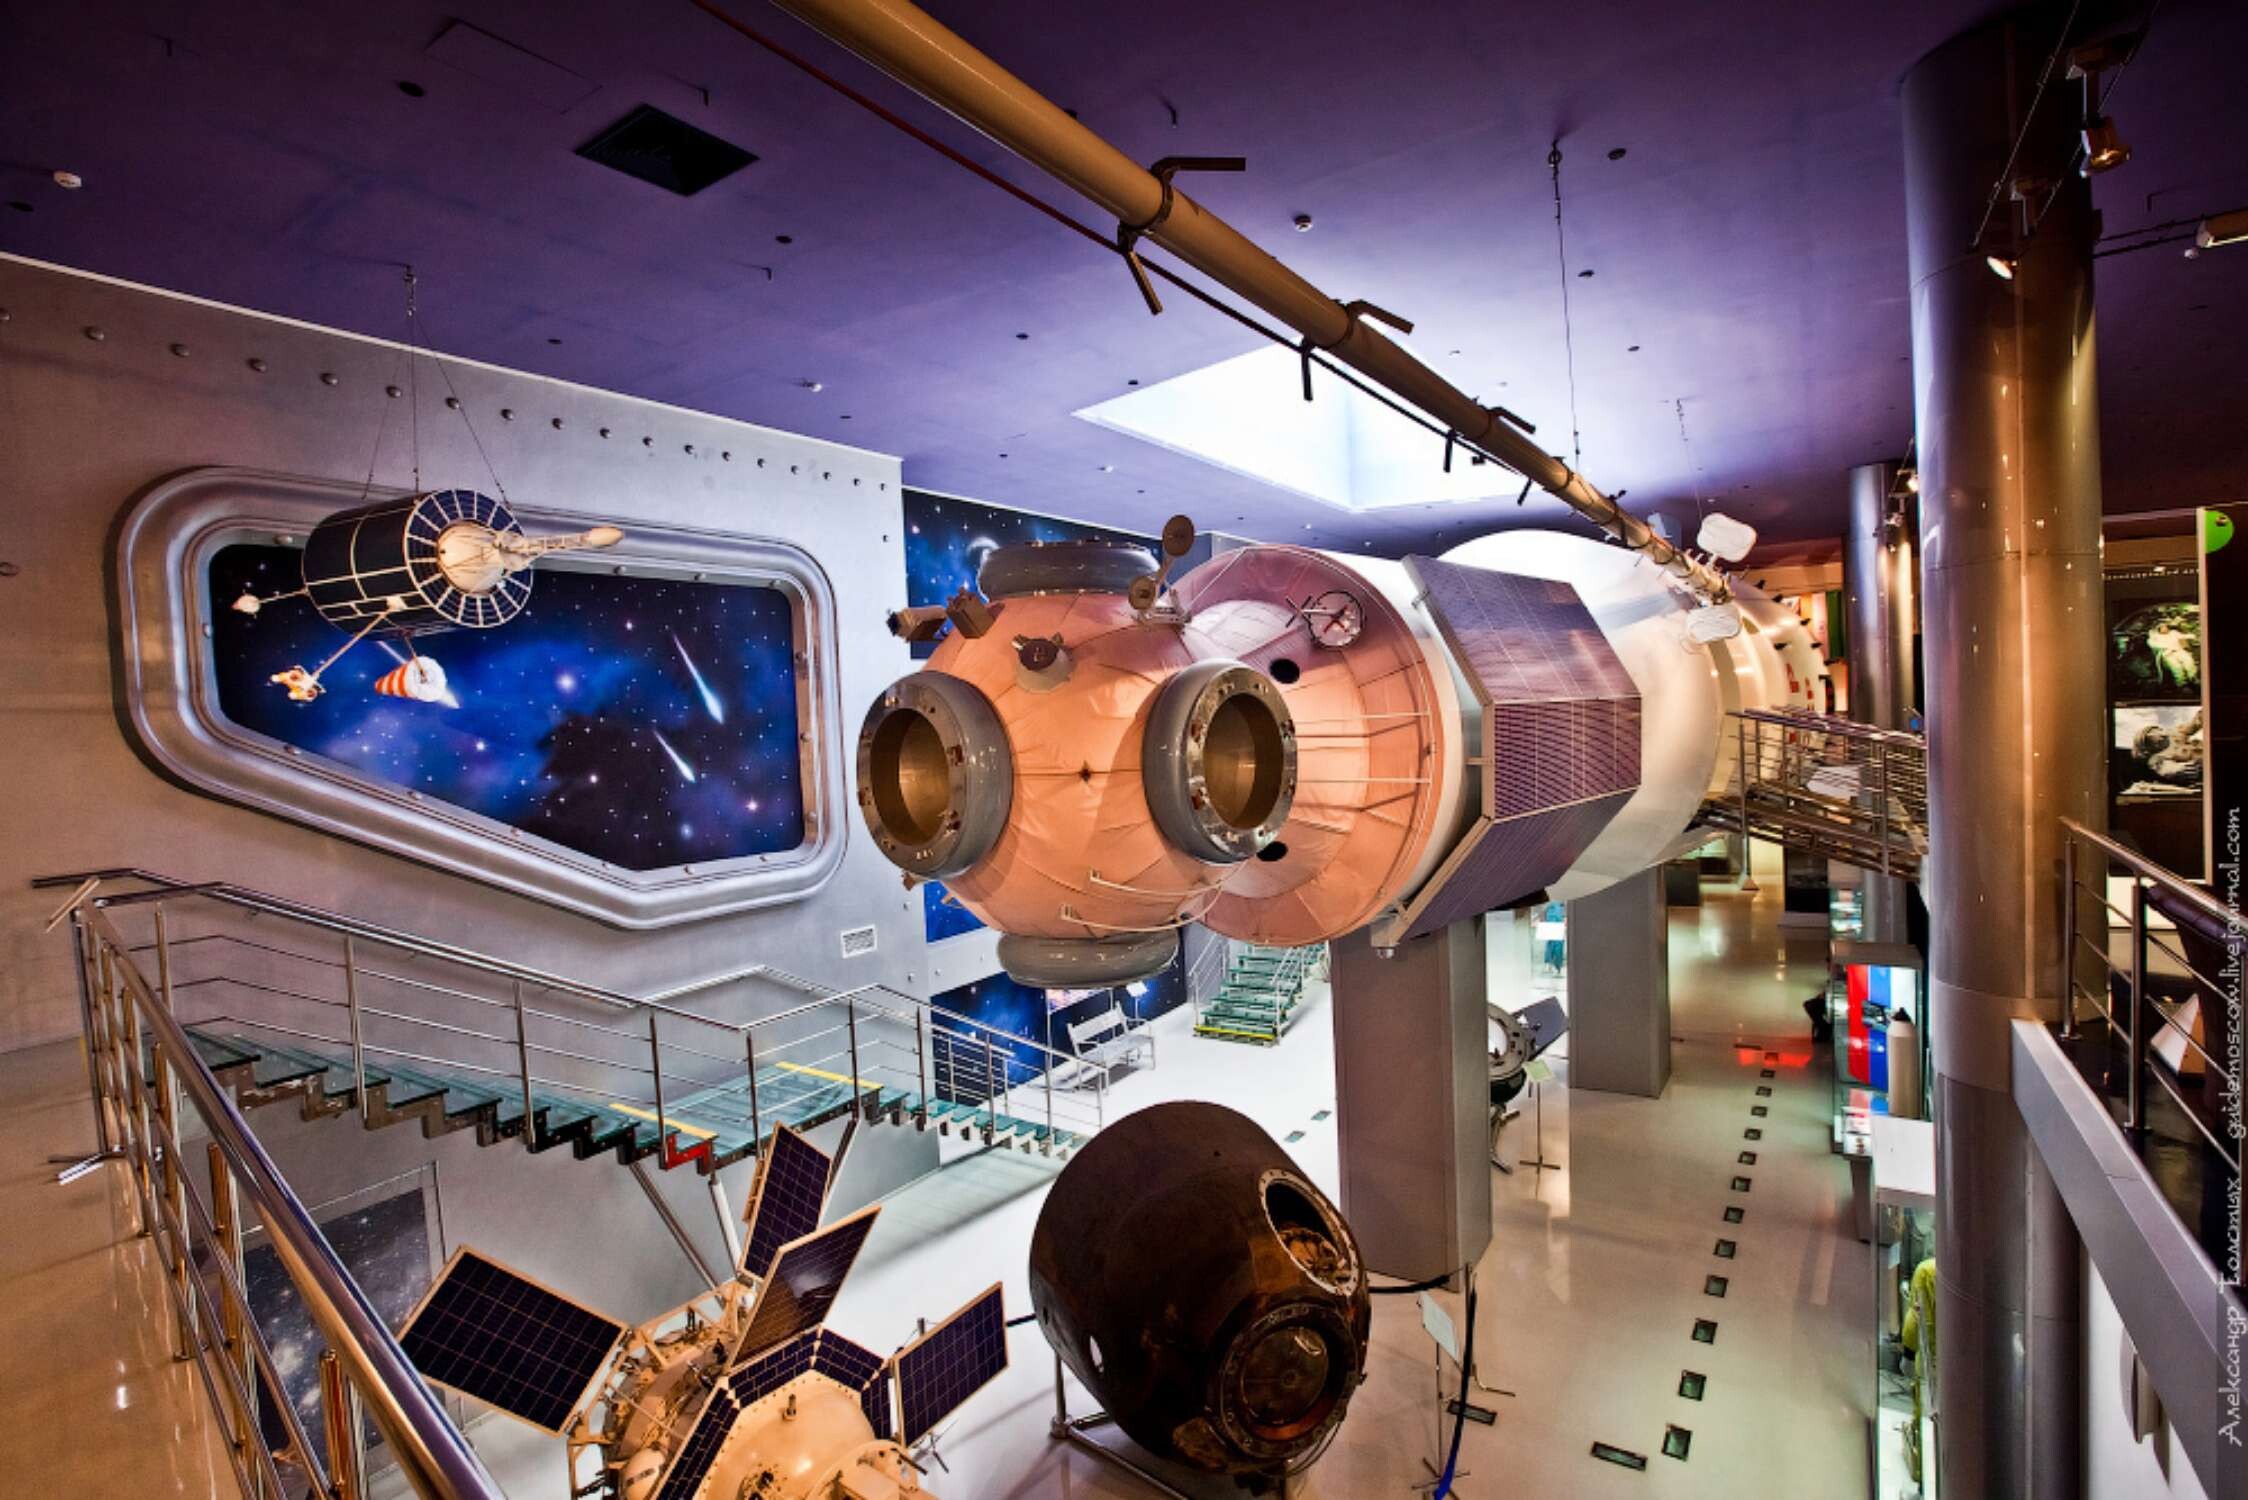 москва музей космонавтики на вднх